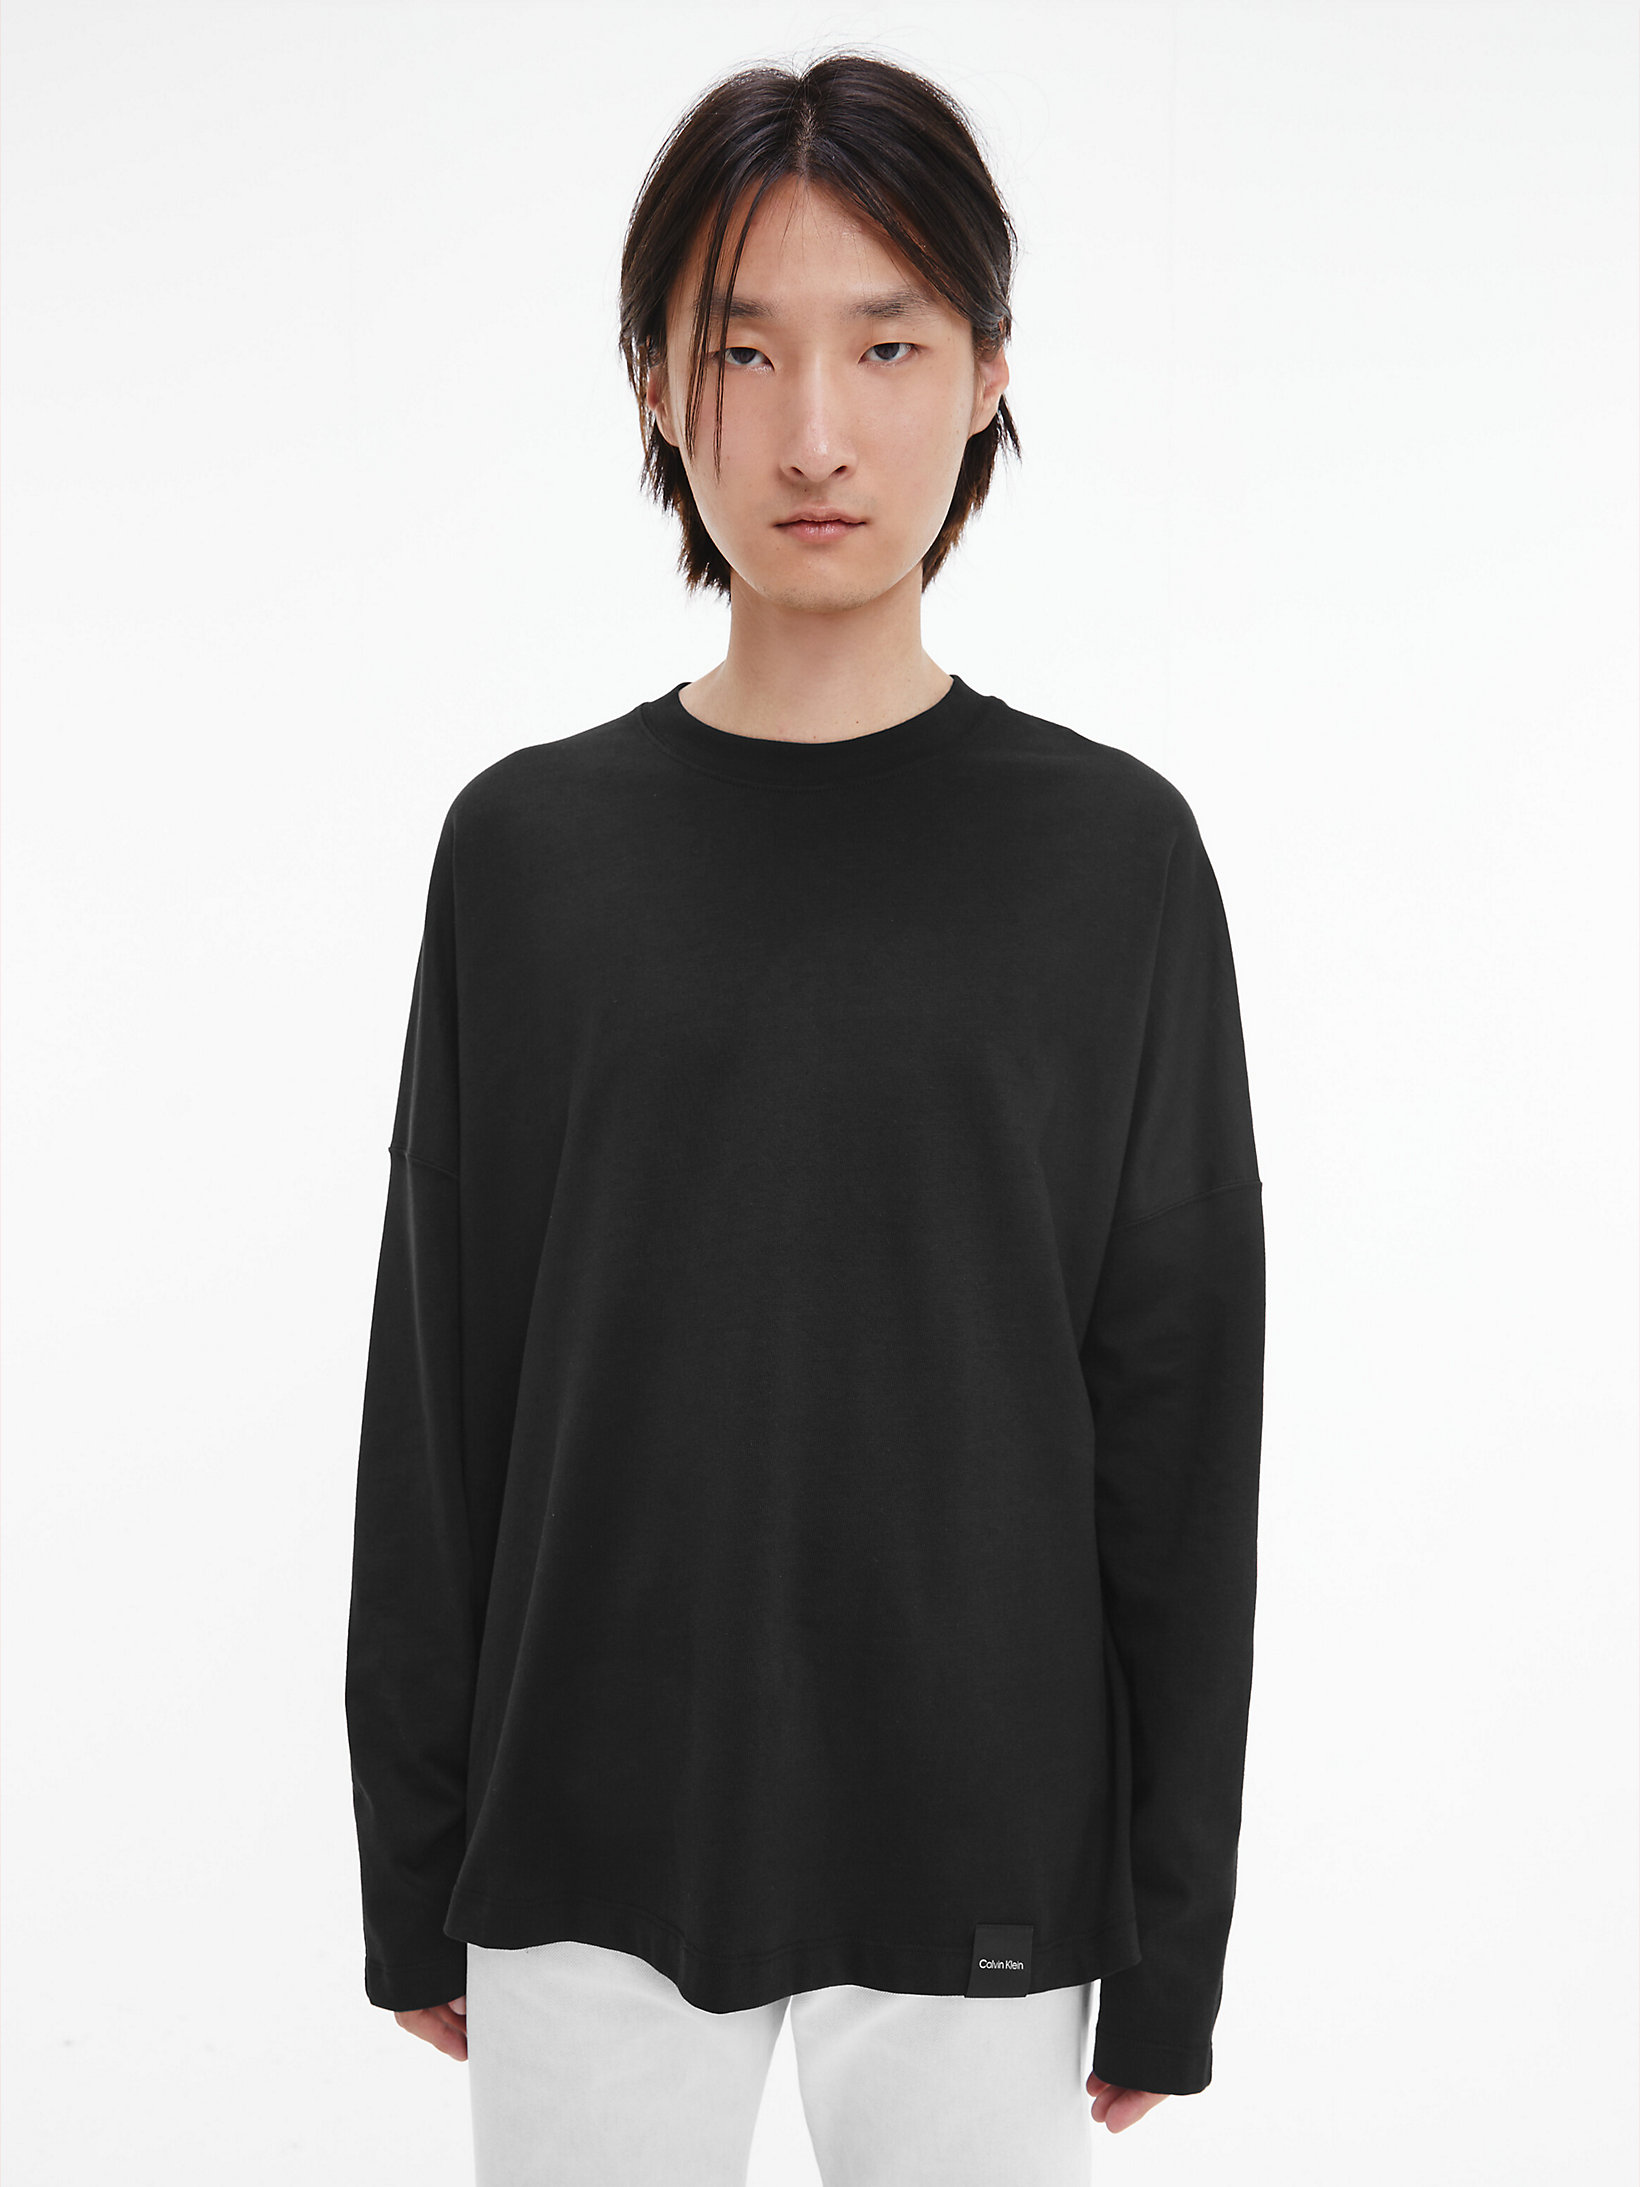 Black Beauty Unisex Relaxed Long-Sleeve T-Shirt - CK Standards undefined unisex Calvin Klein